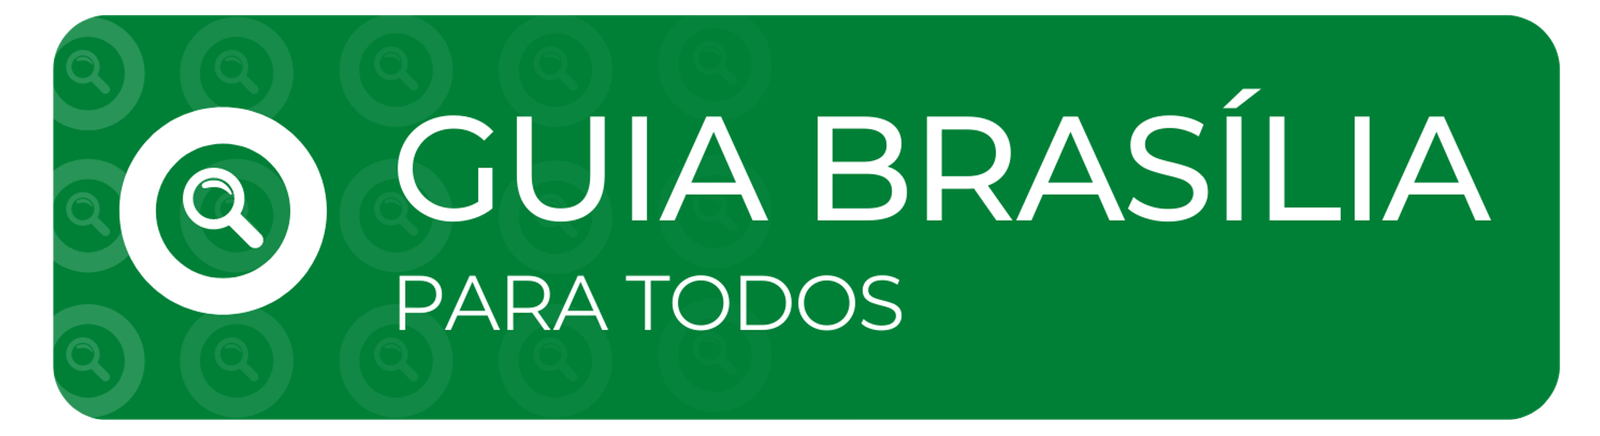 GUIA BRASÍLIA